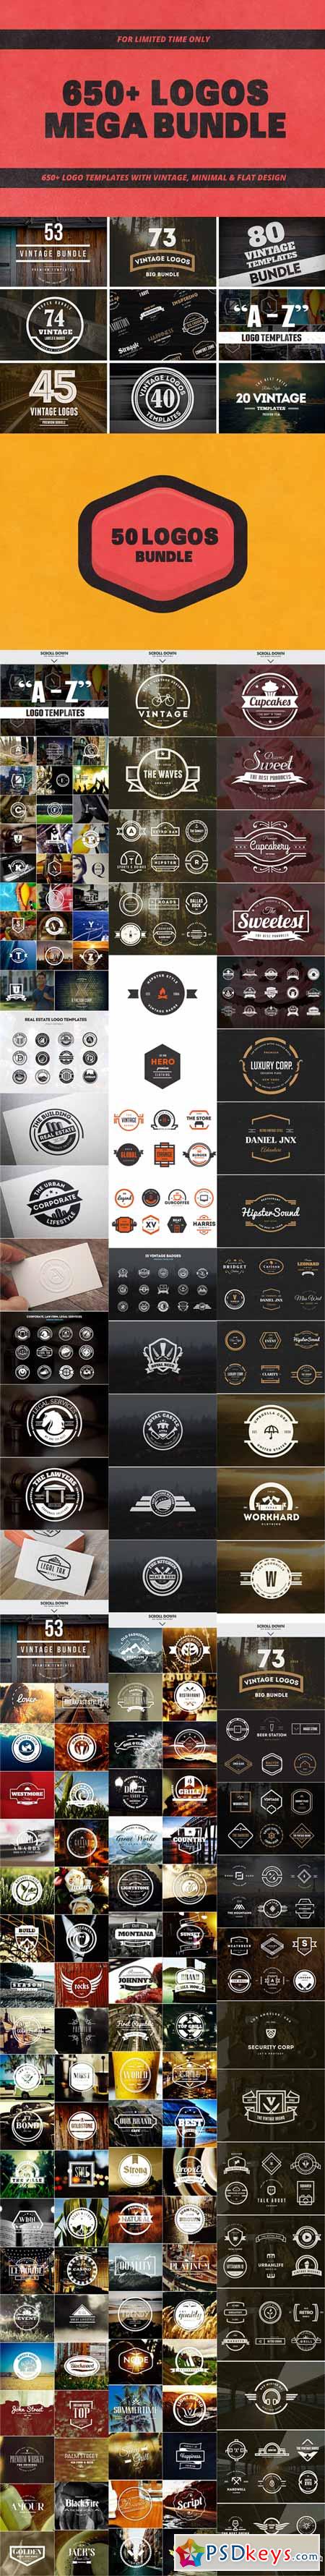 MEGA BUNDLE 650+ Logos and Badges 426253